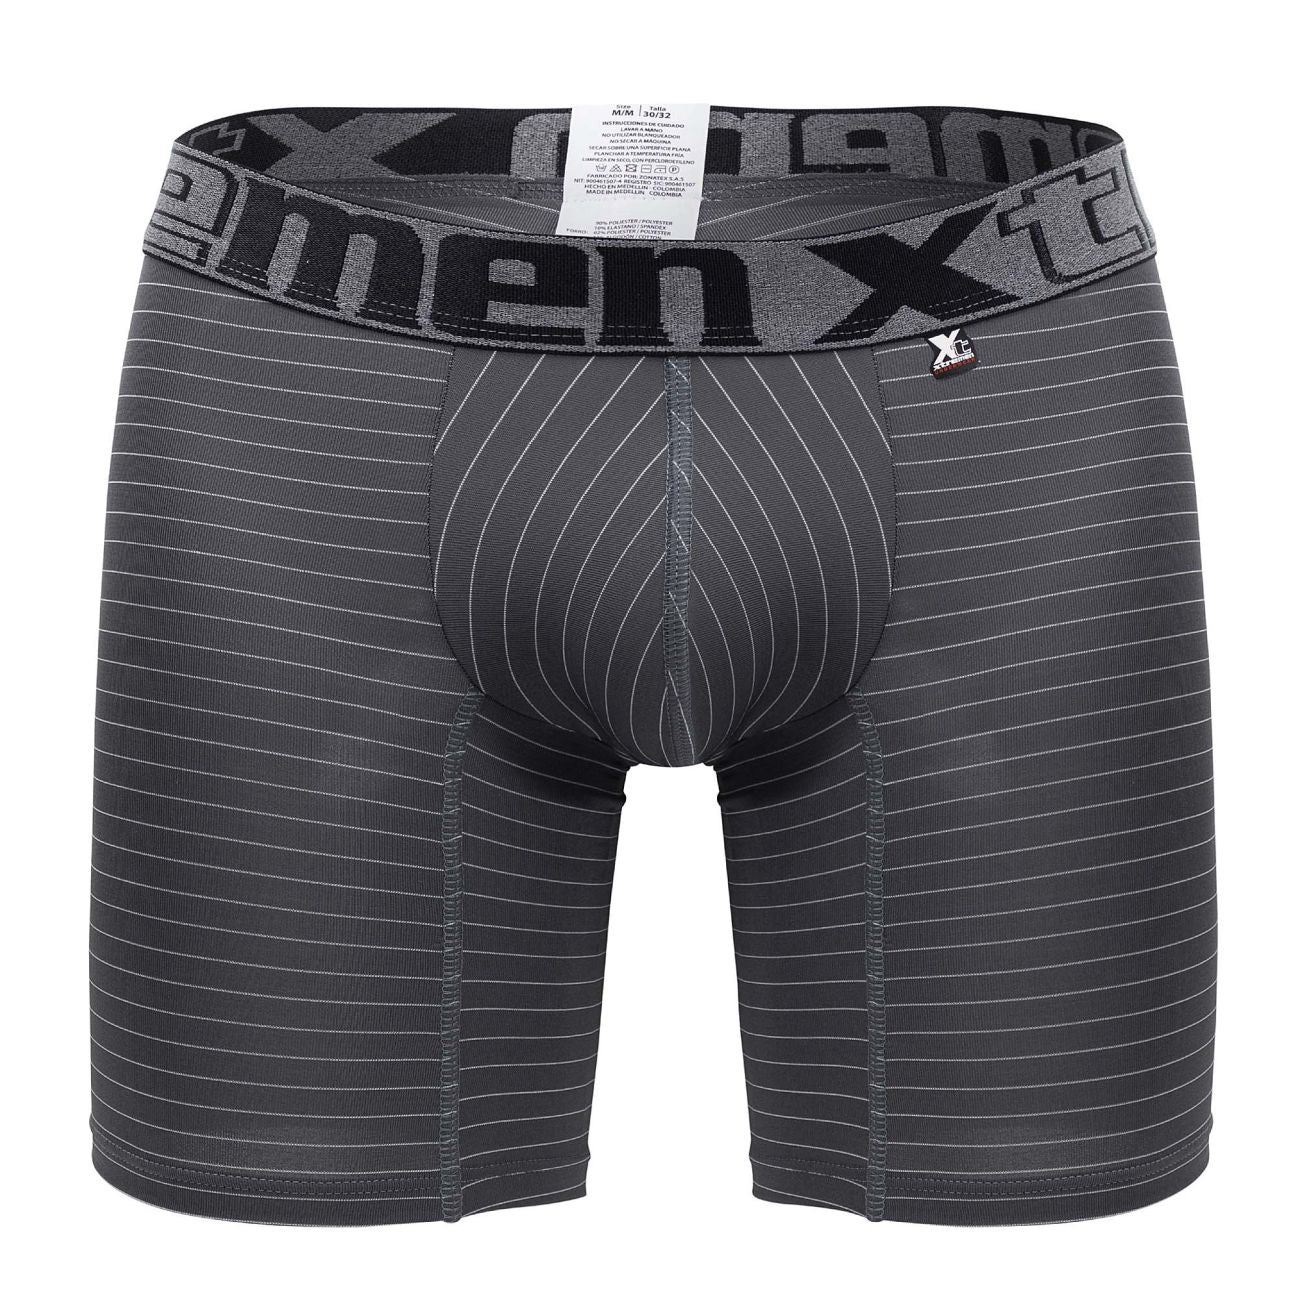 Xtremen 70004 Striped Boxer Briefs Gray Plus Sizes